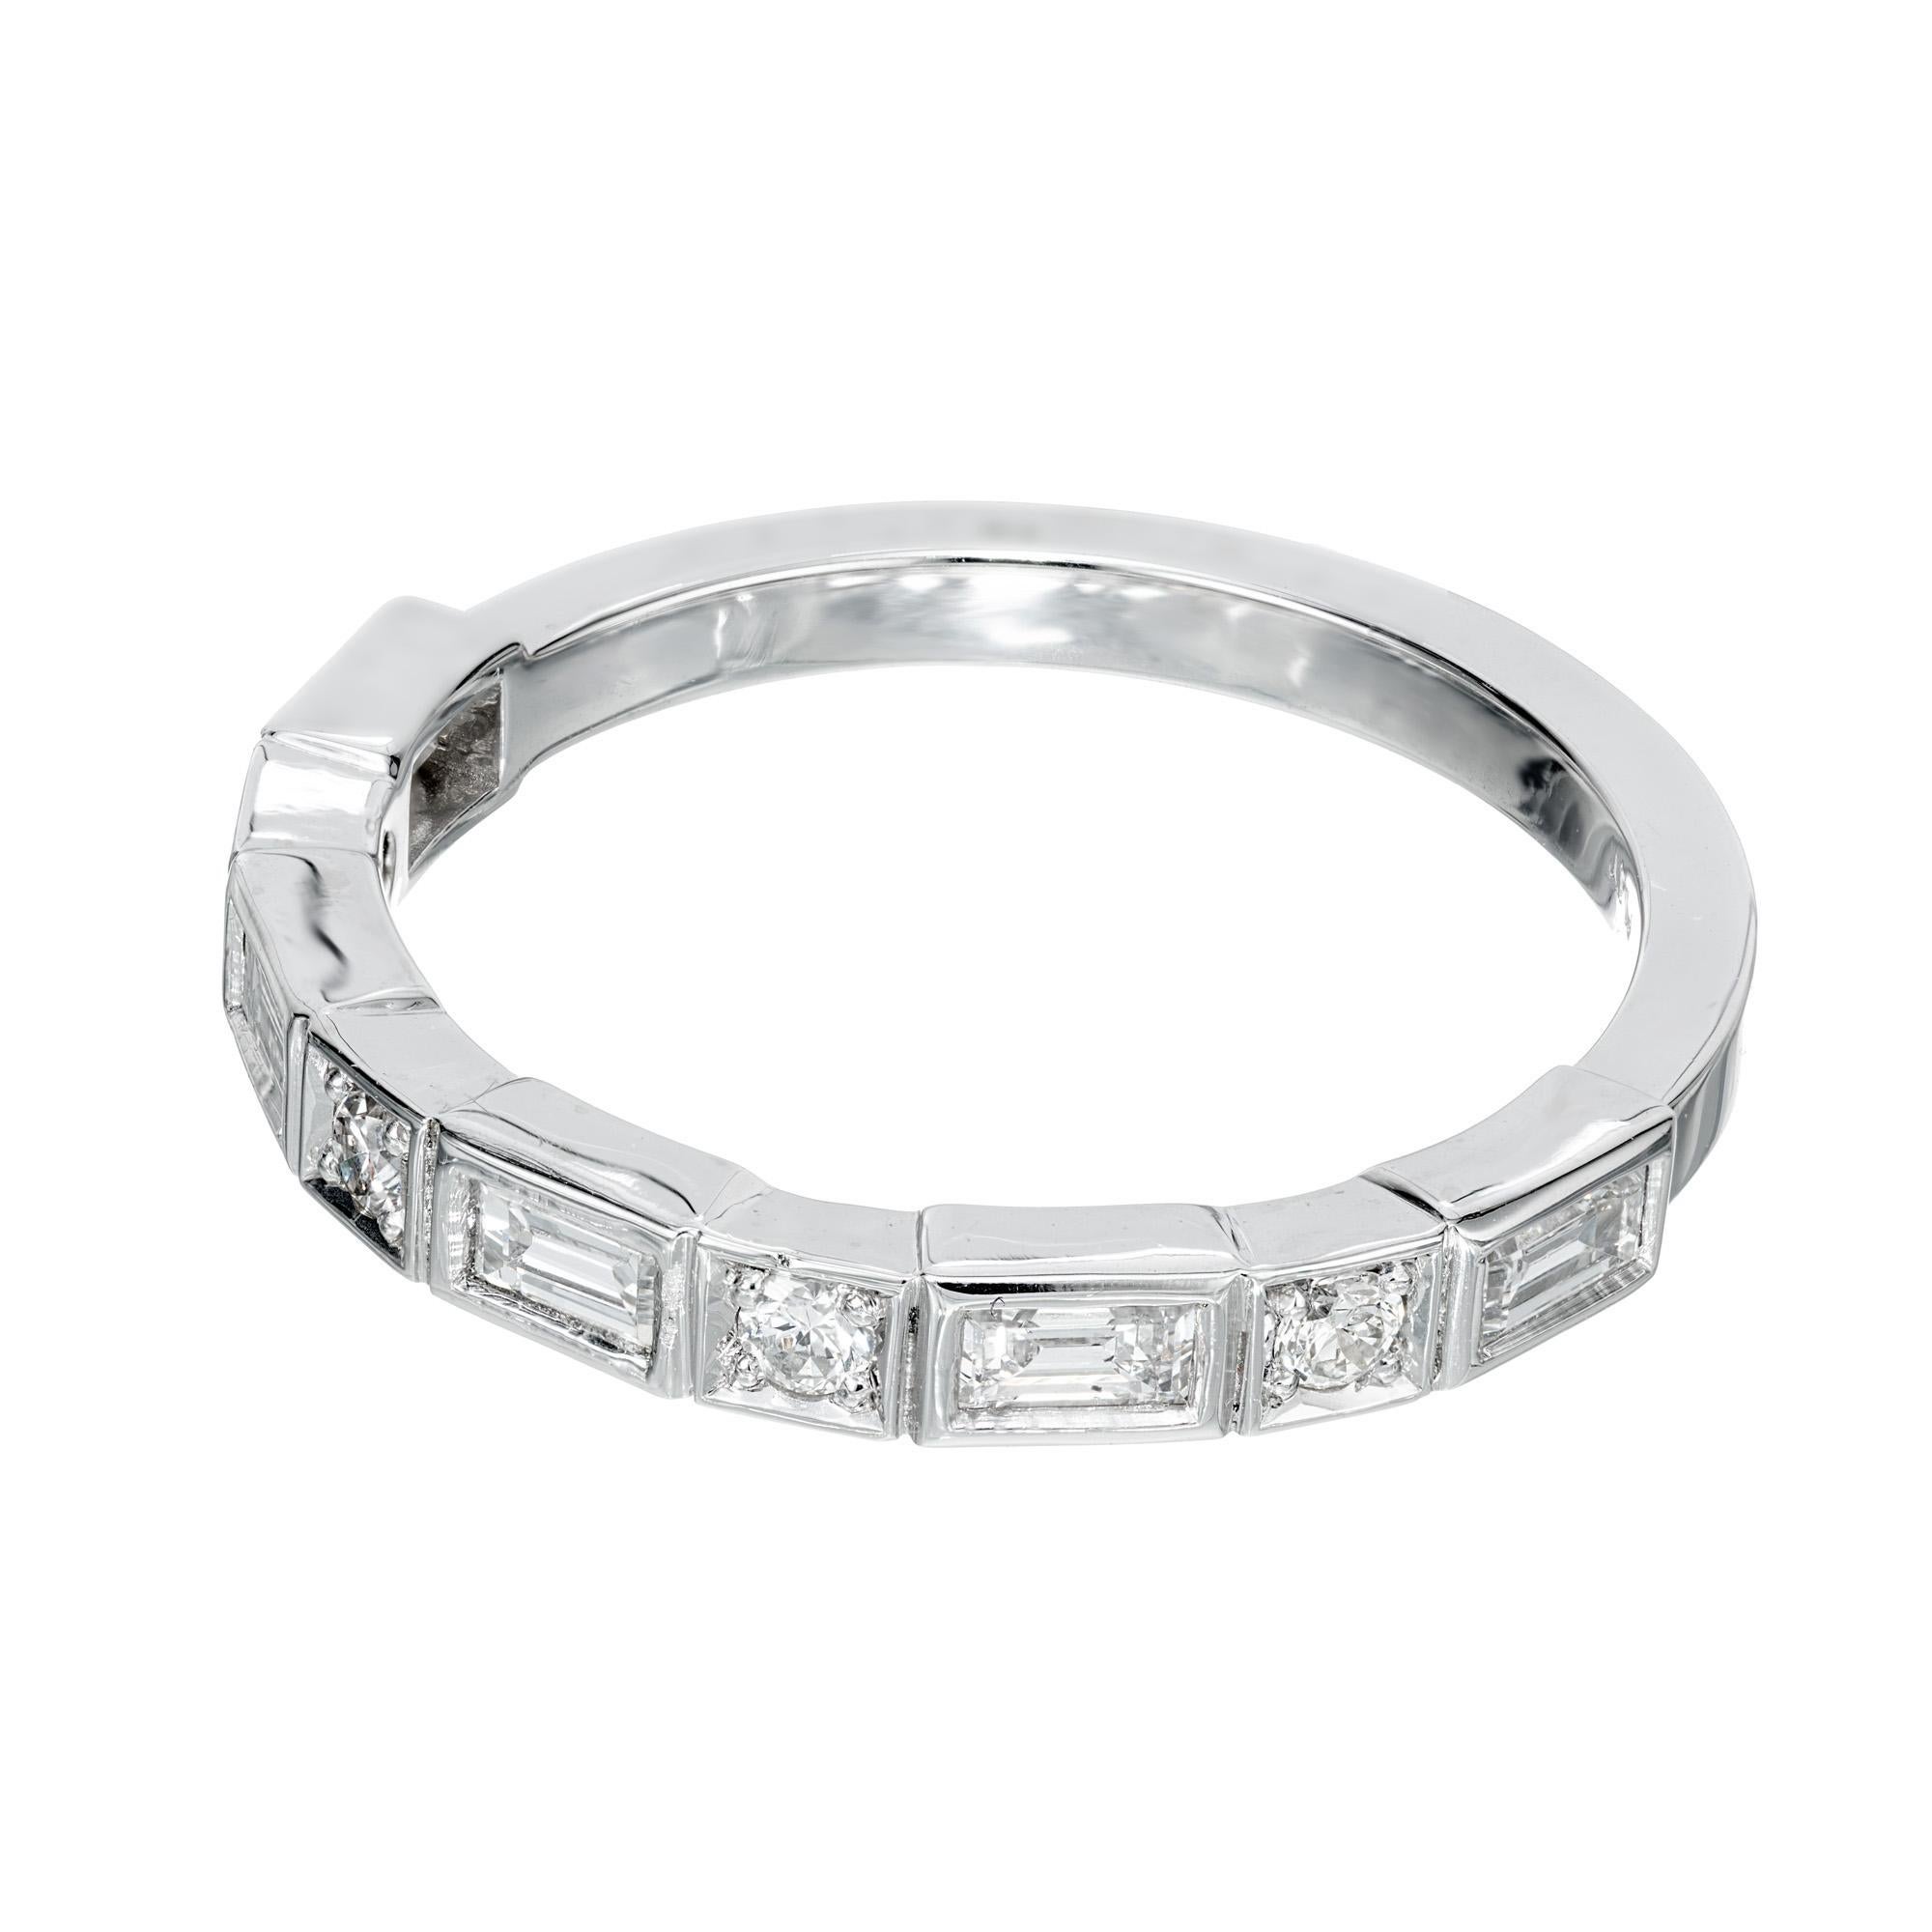 Round Cut Peter Suchy .43 Carat Diamond Platinum Wedding Band Ring